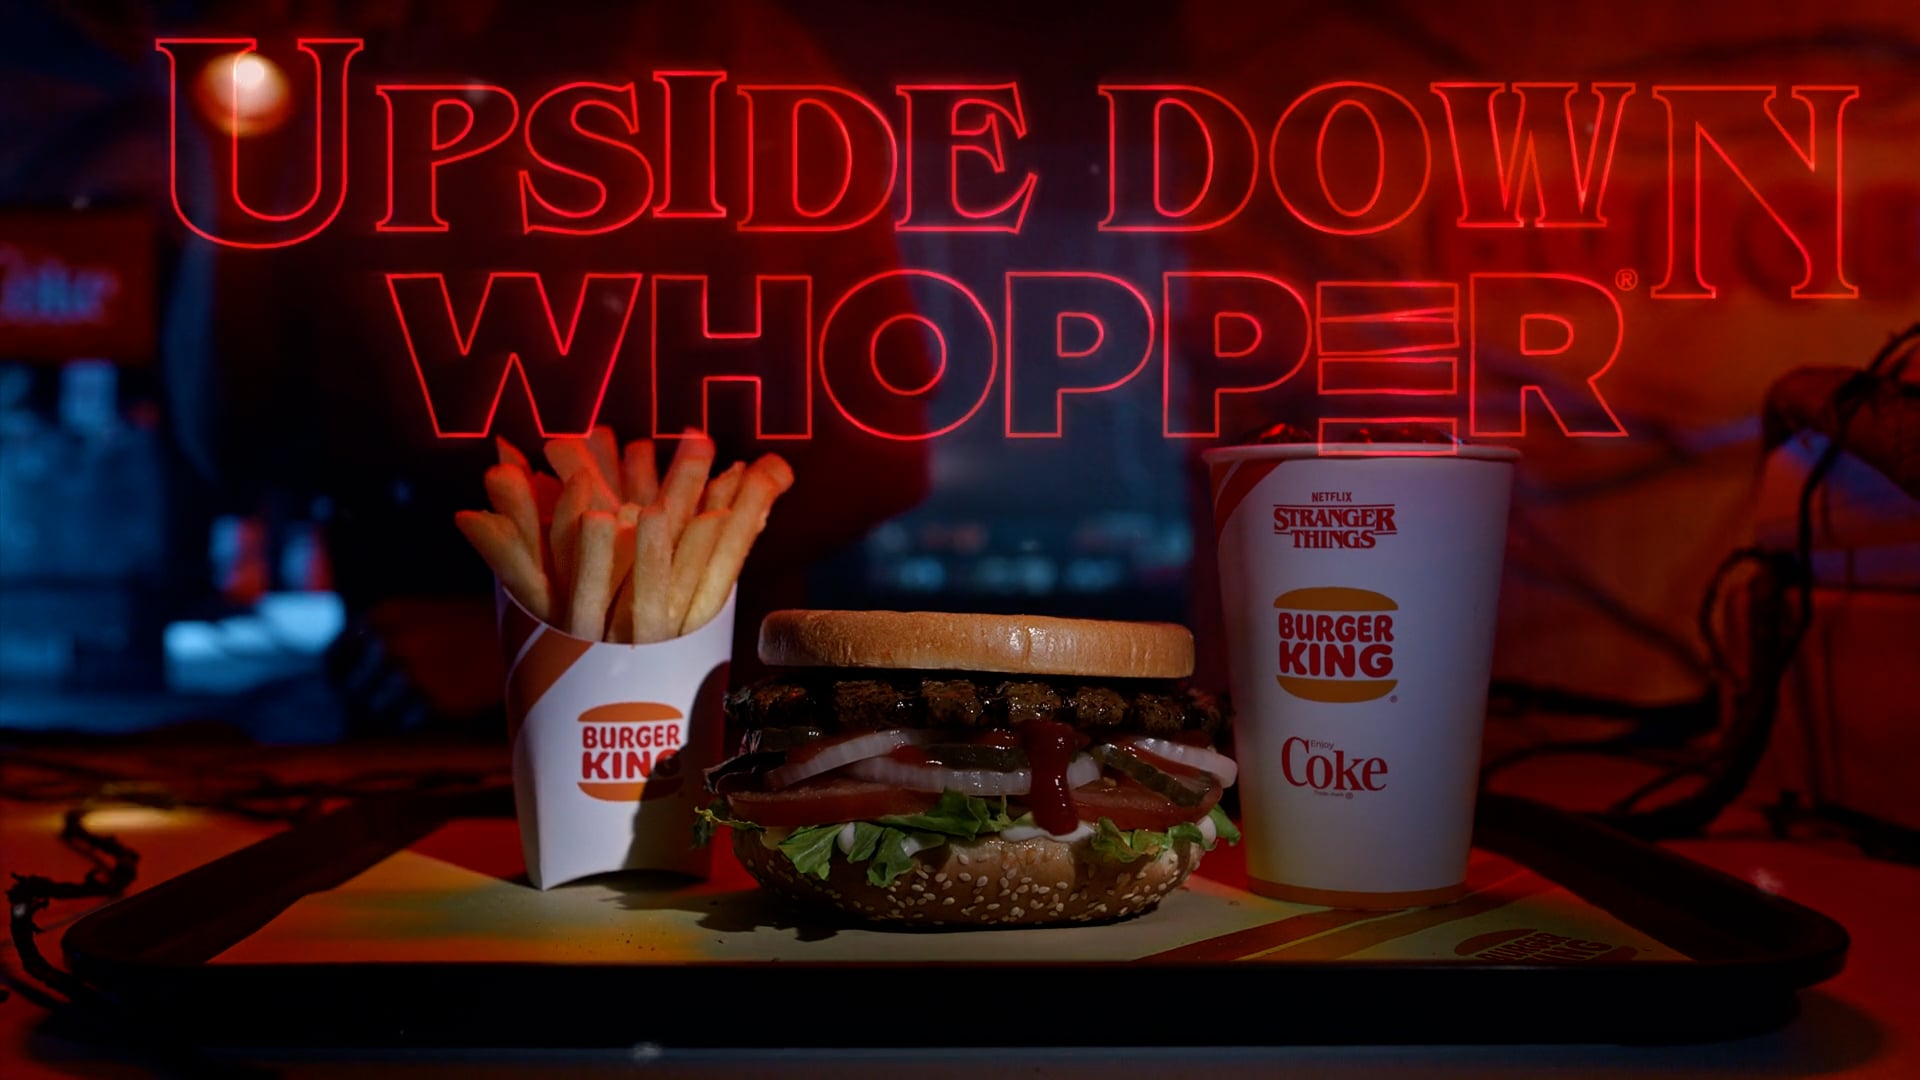 Burger King "Upside Down Whopper"